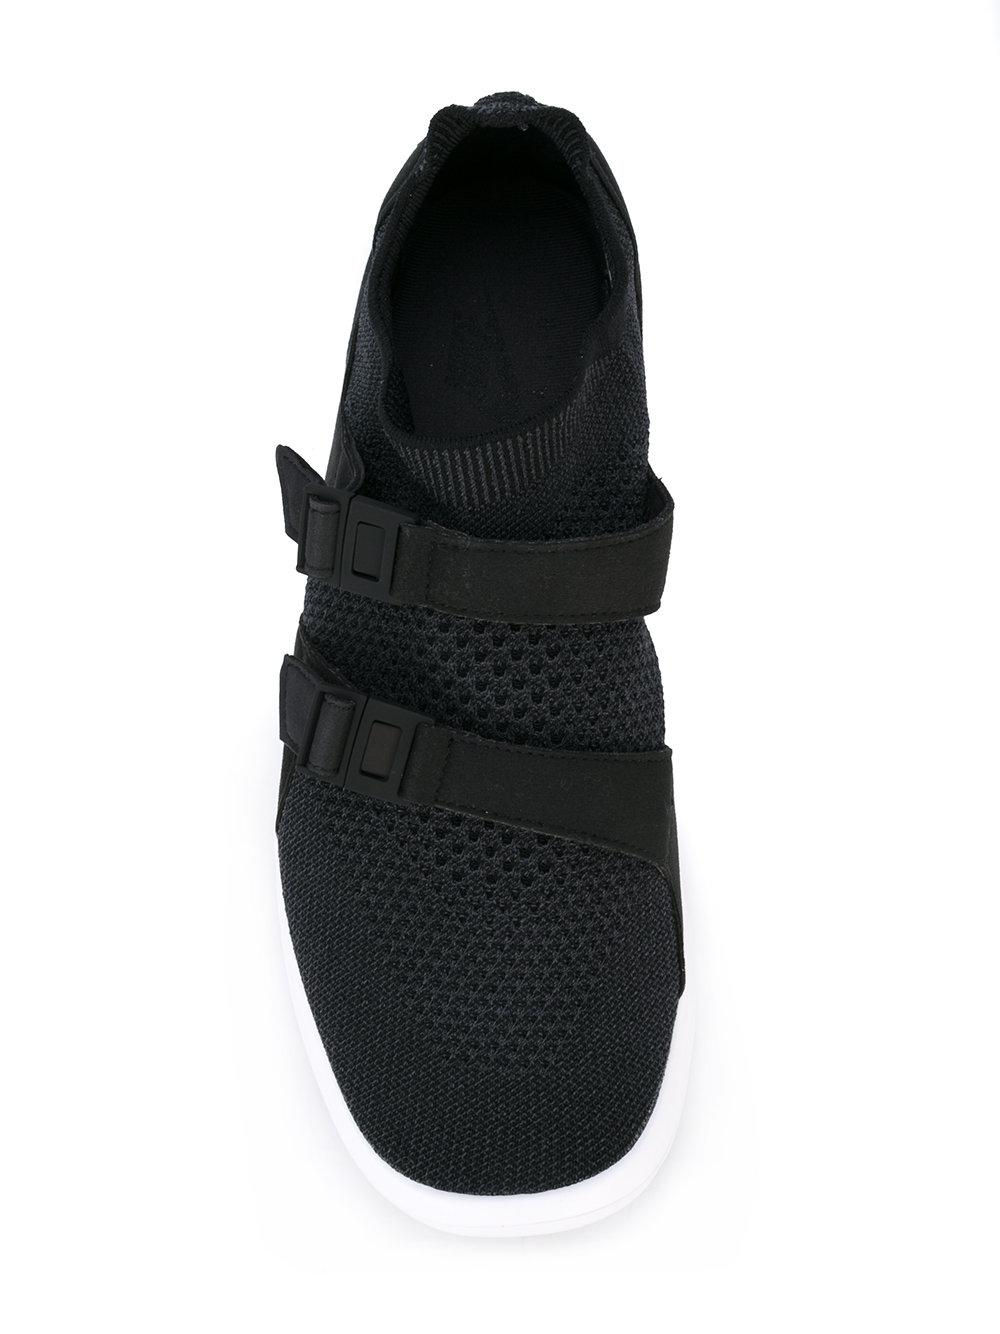 Nike Synthetic Double Strap Sneakers in Black for Men | Lyst Australia